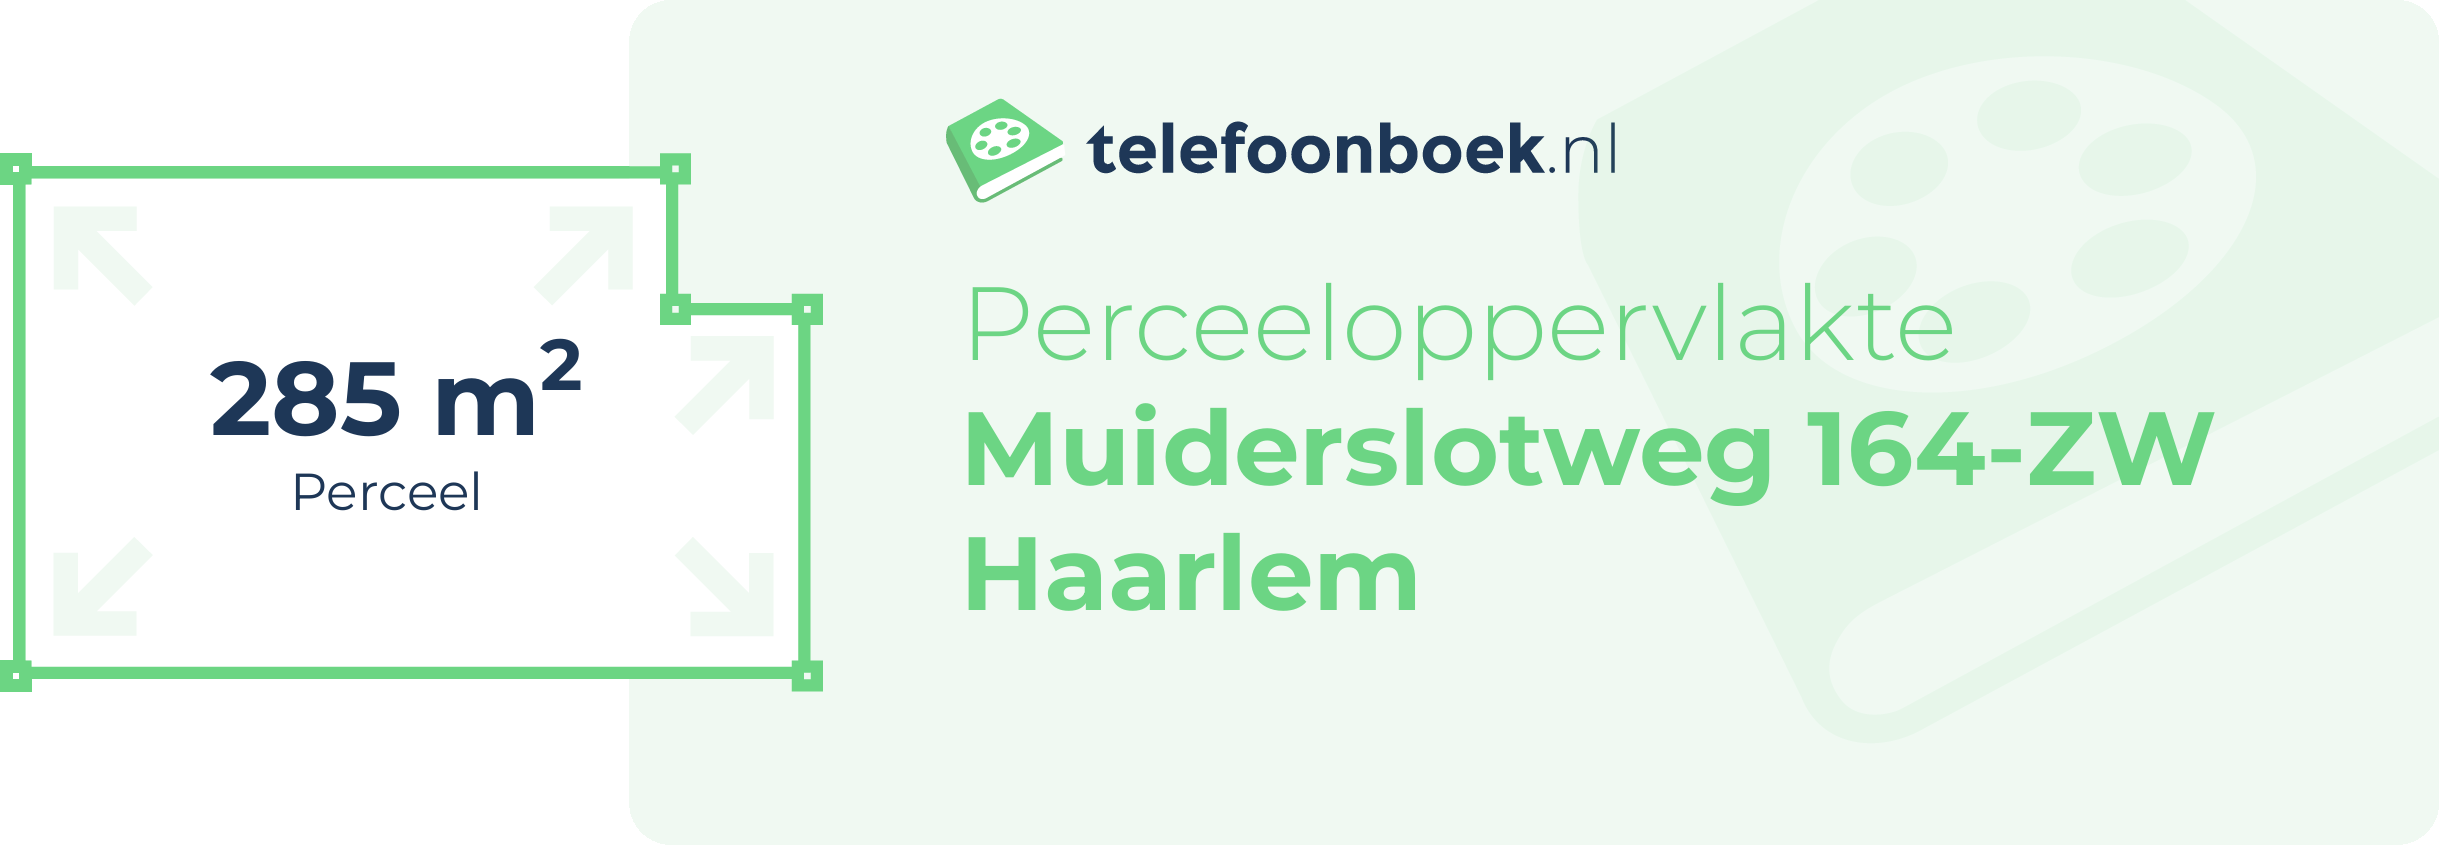 Perceeloppervlakte Muiderslotweg 164-ZW Haarlem